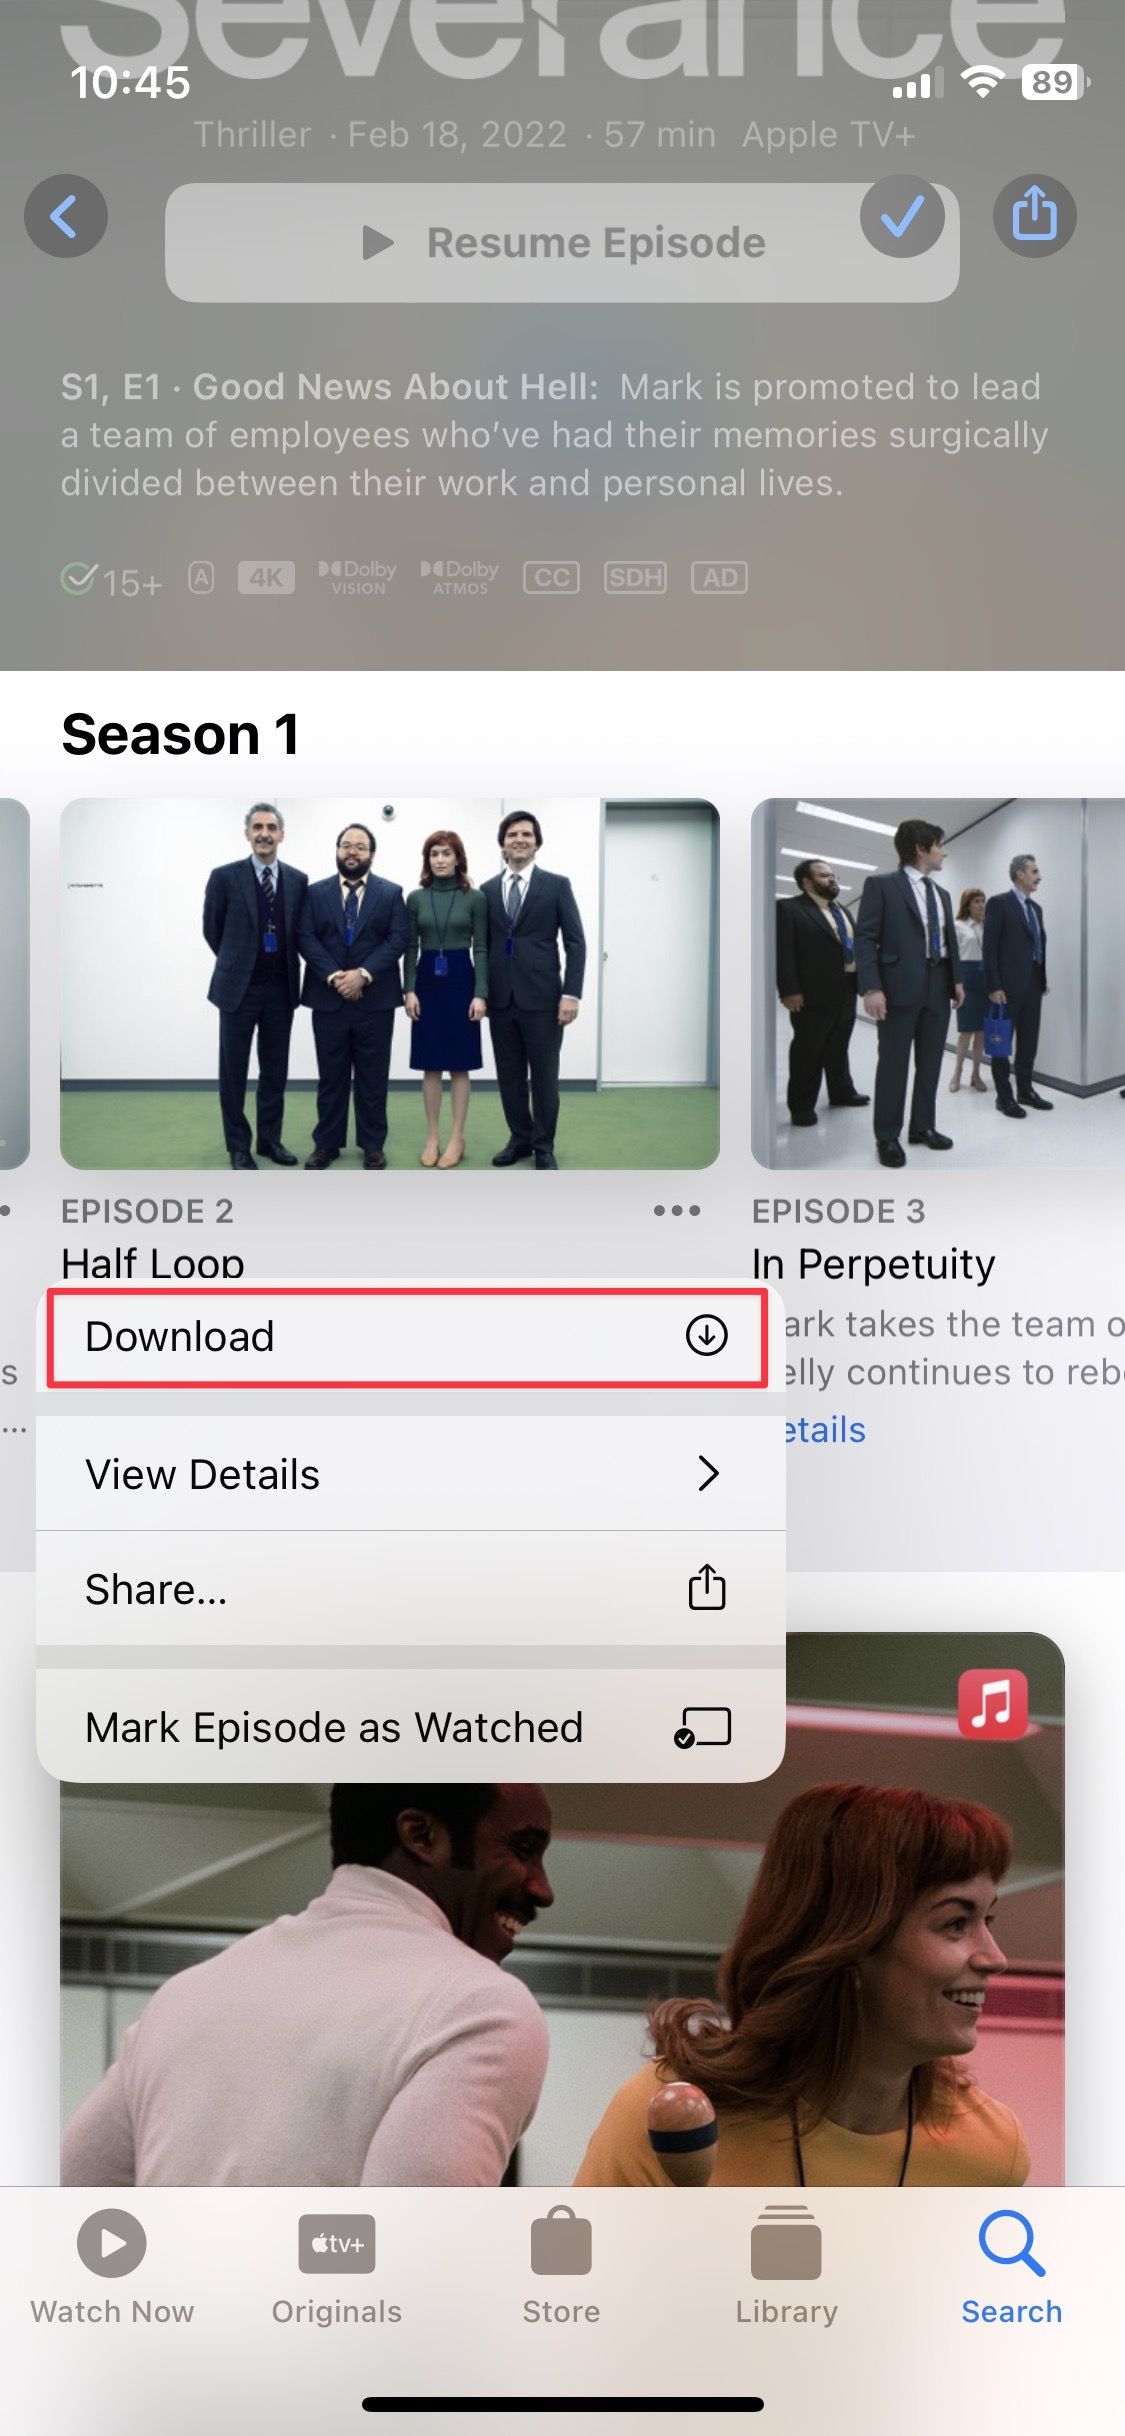 Choosing the download option in Apple TV+ iOS app